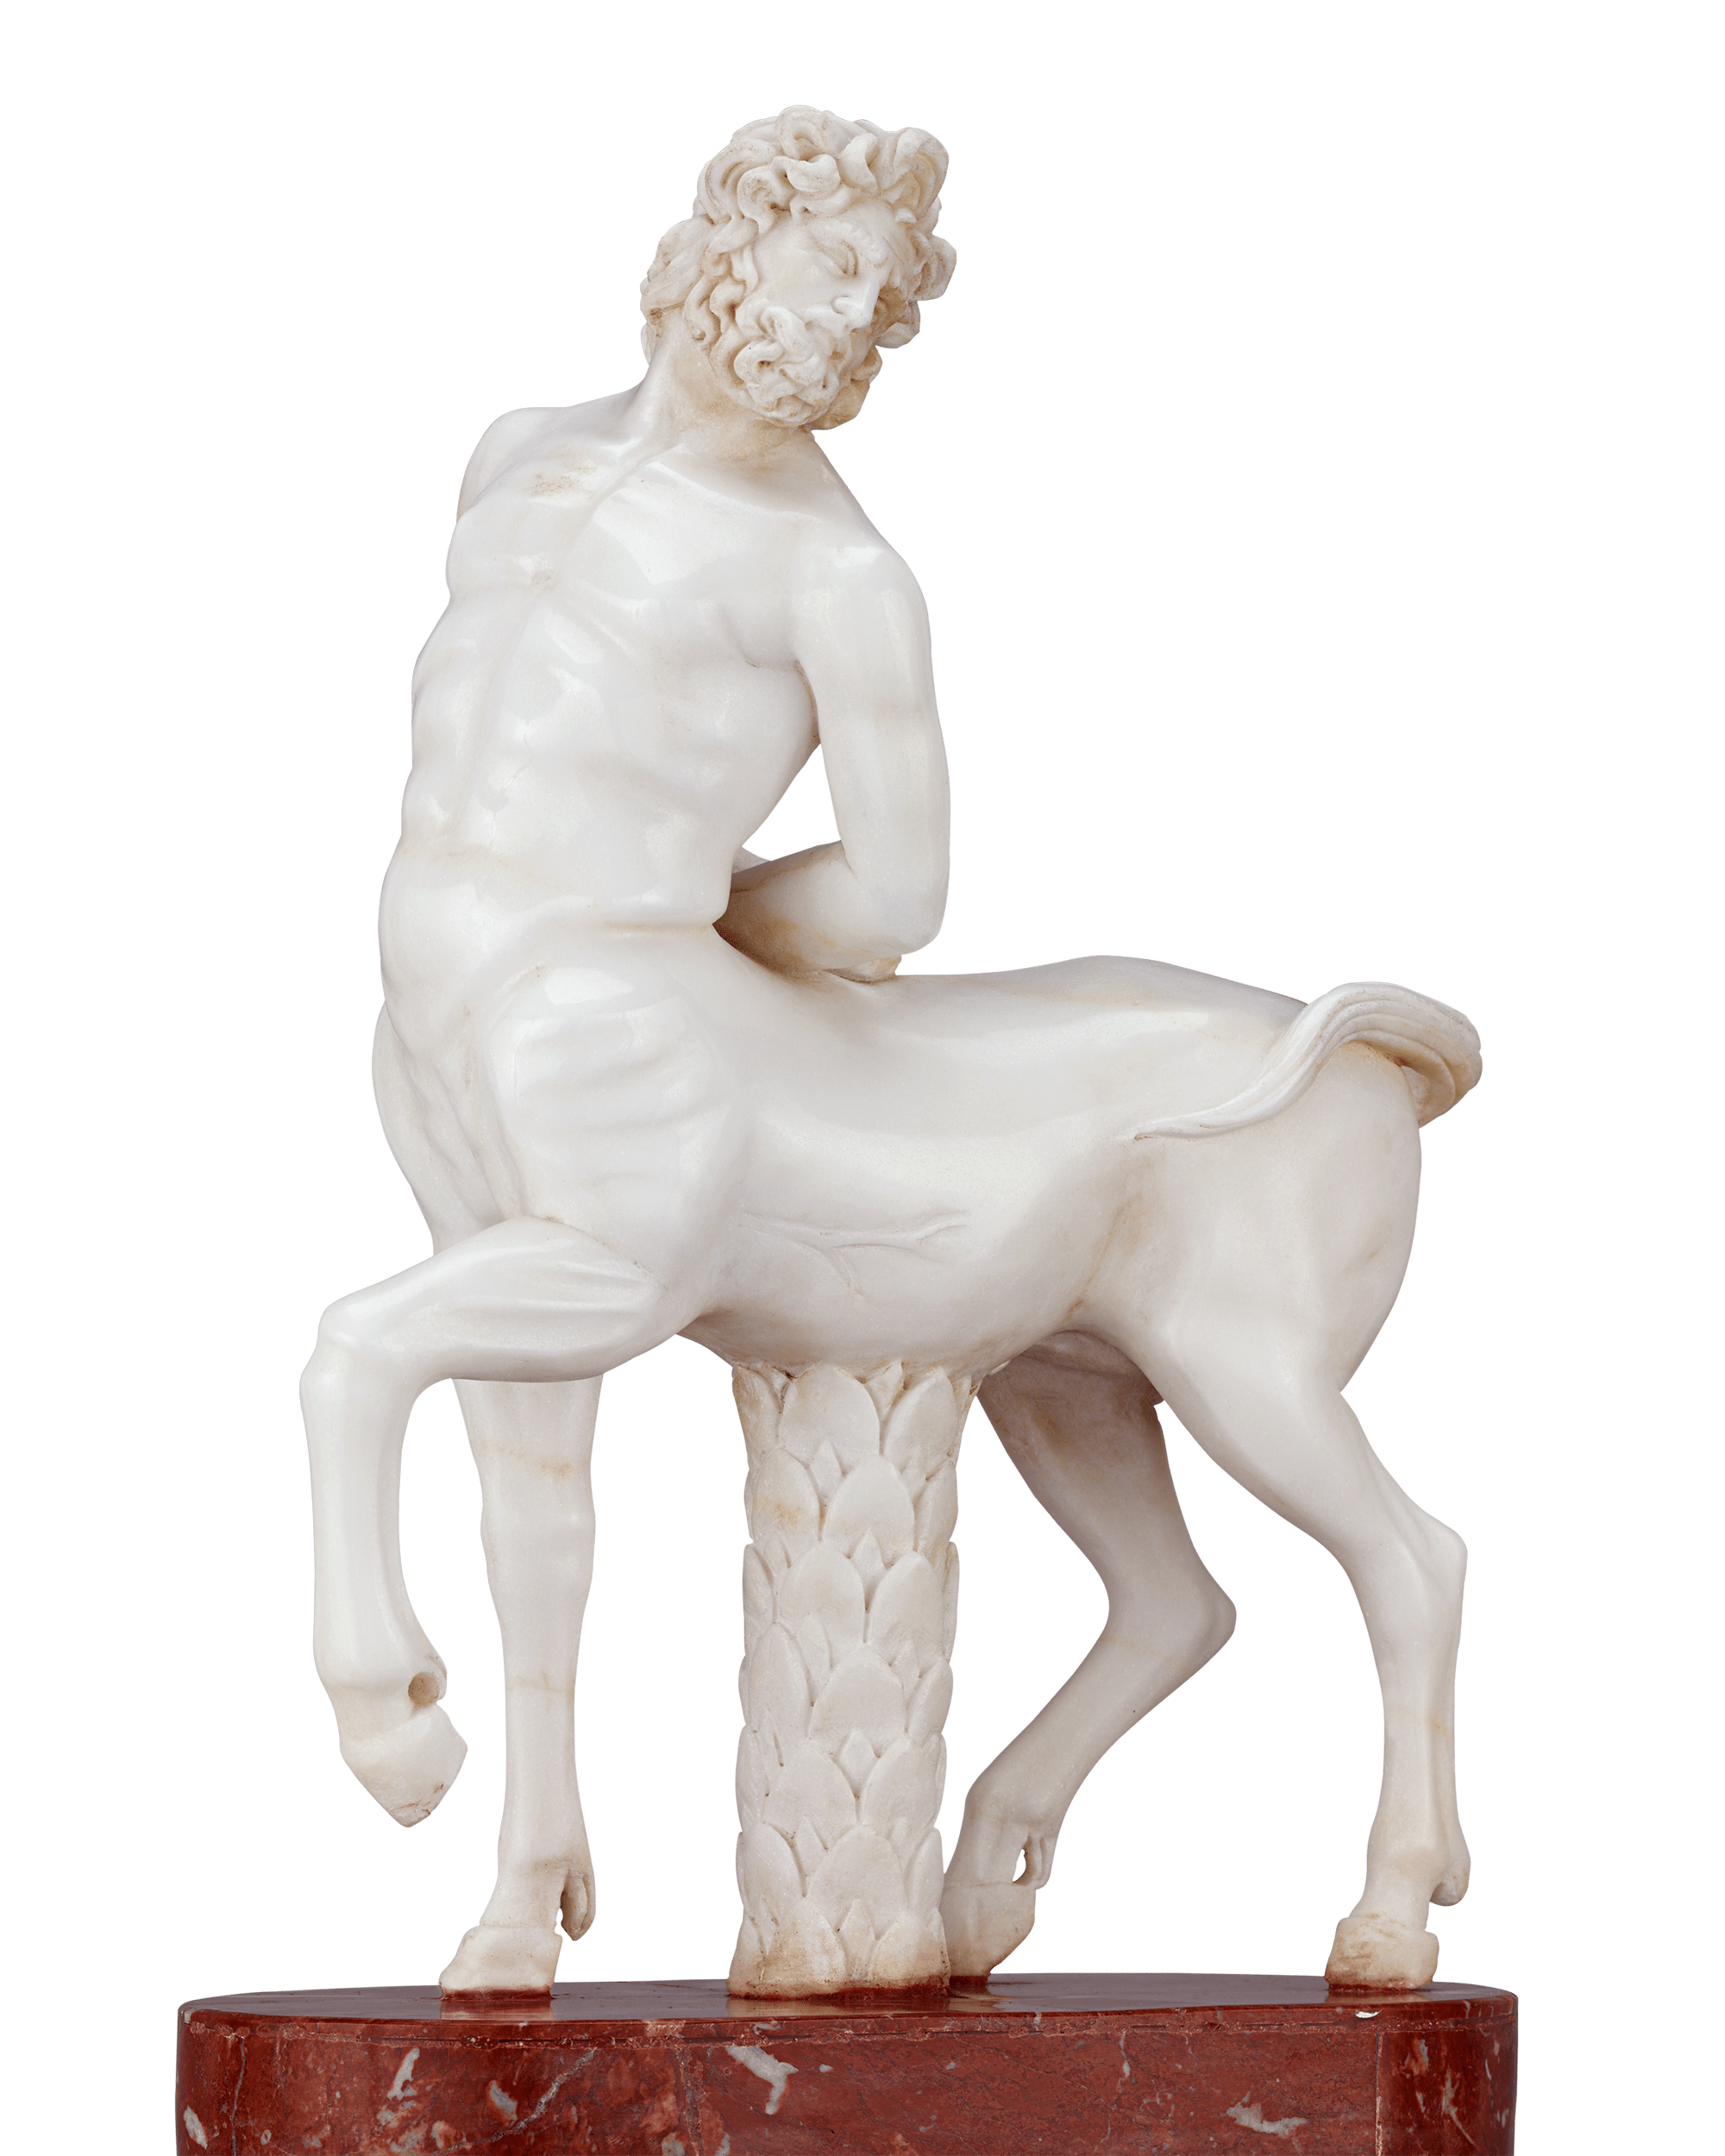 Italian Marble Furietti Centaurs